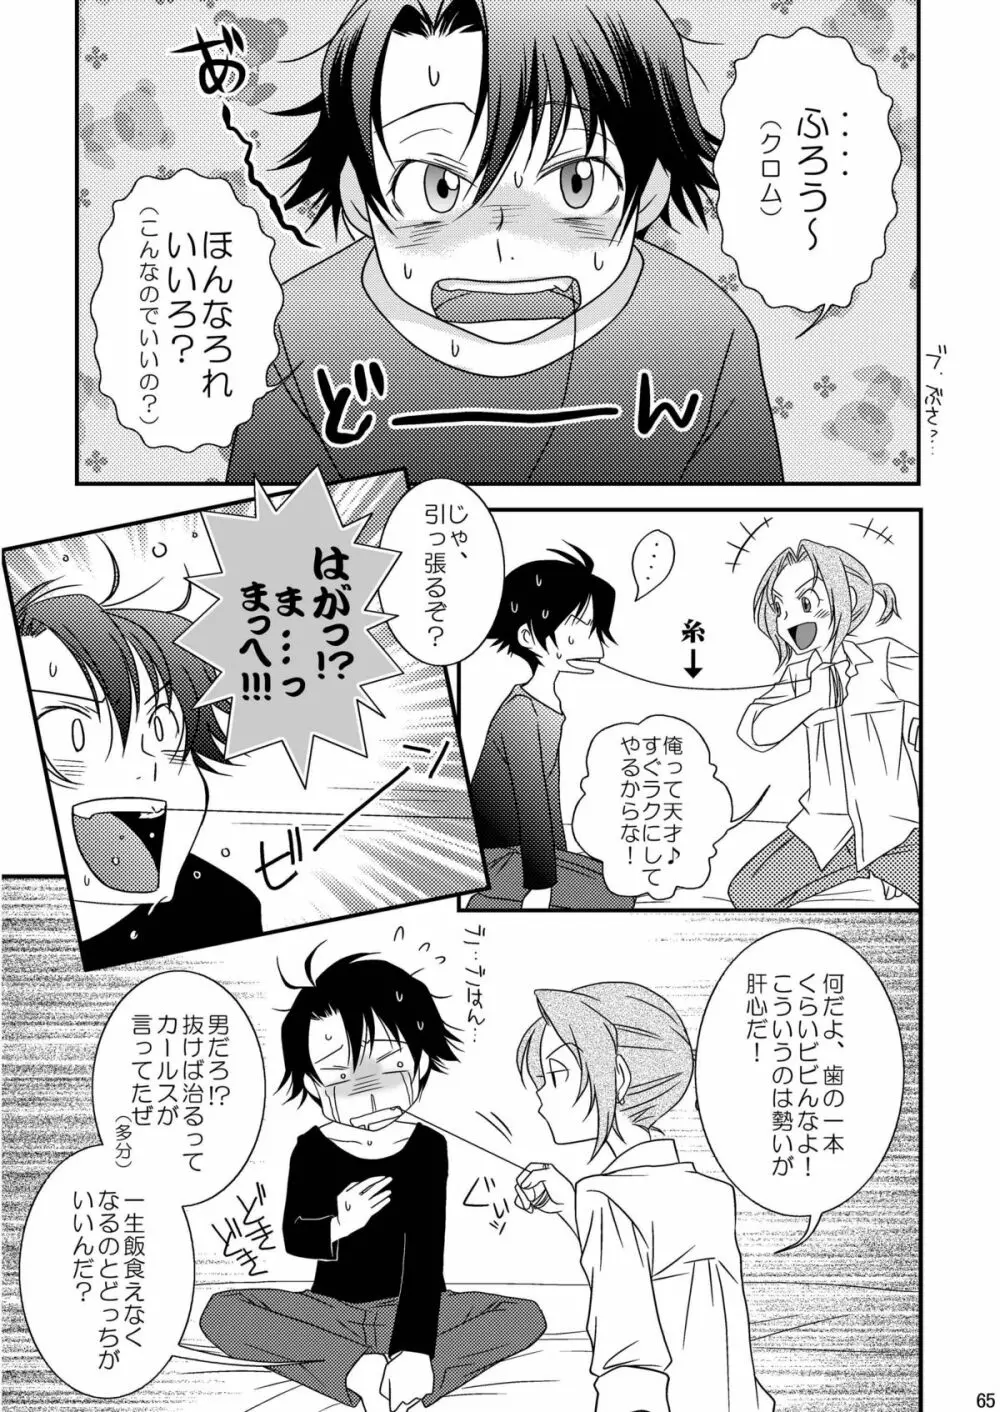 Re: ぷれい2 - page65